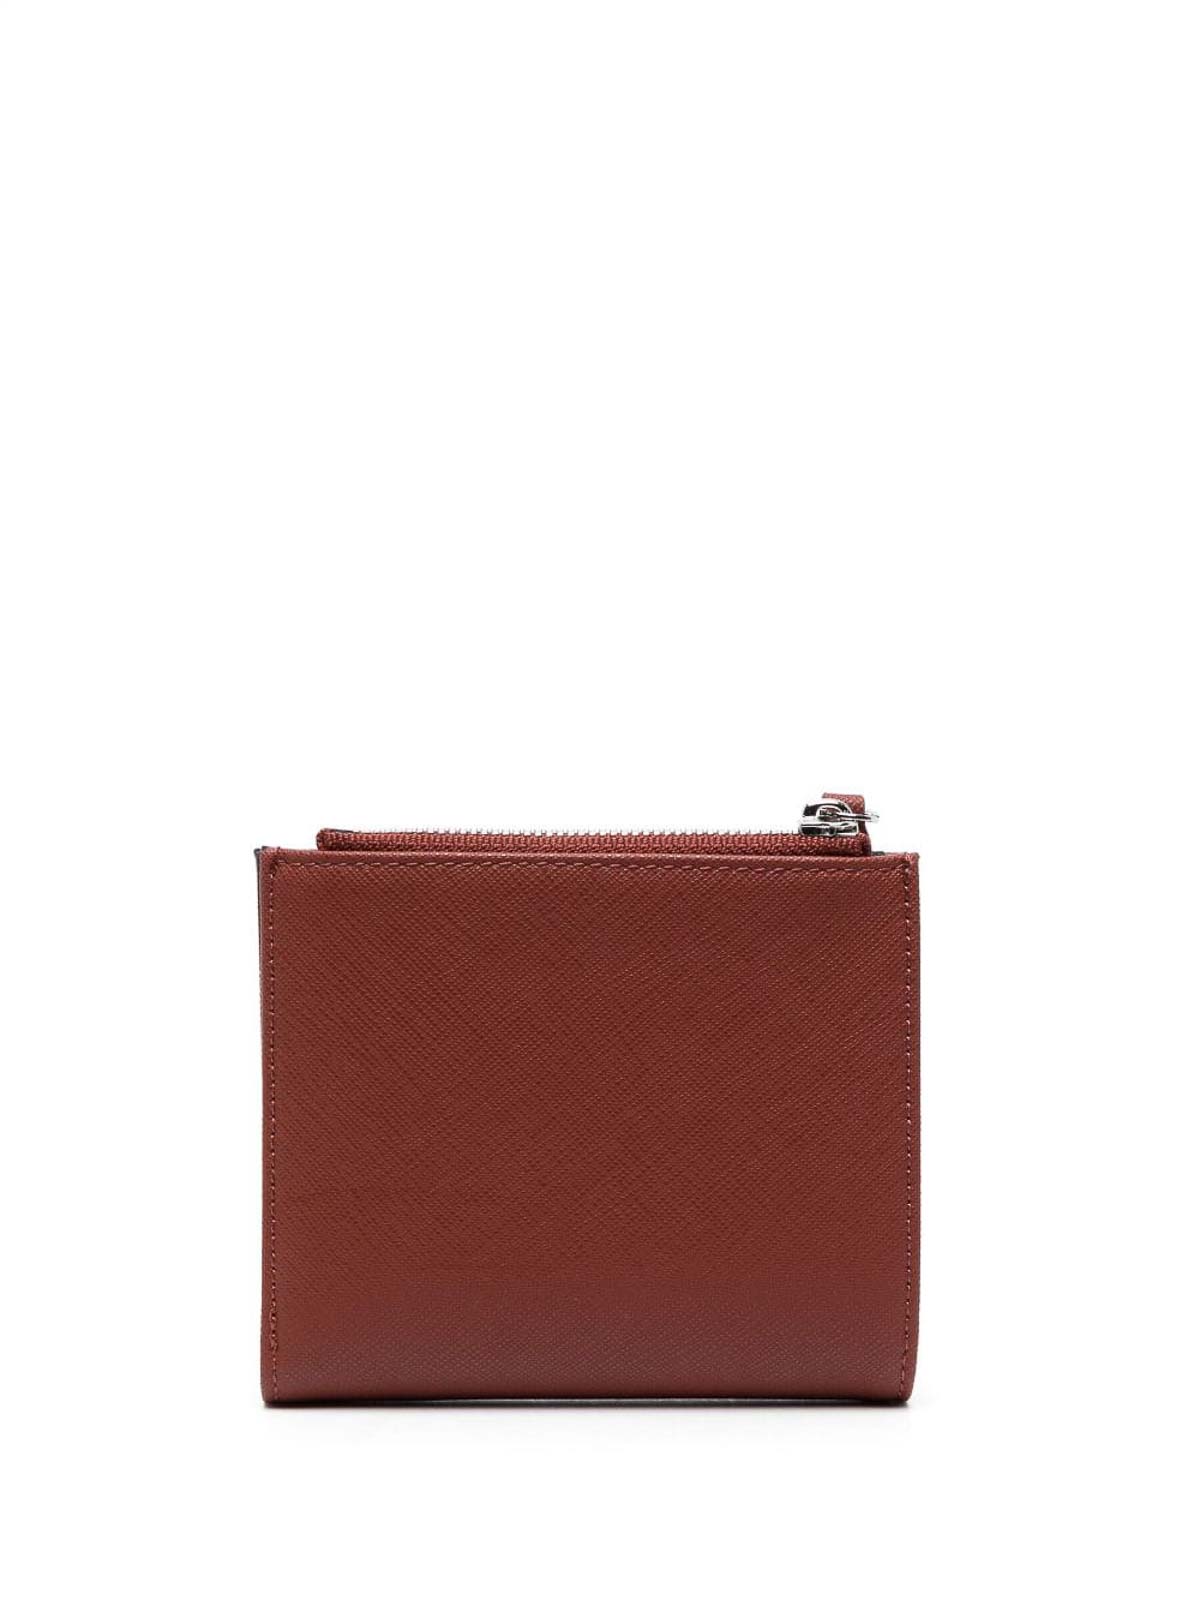 Two-Toned Leather Wallet With Wraparound Zip by Giorgio Armani Men...